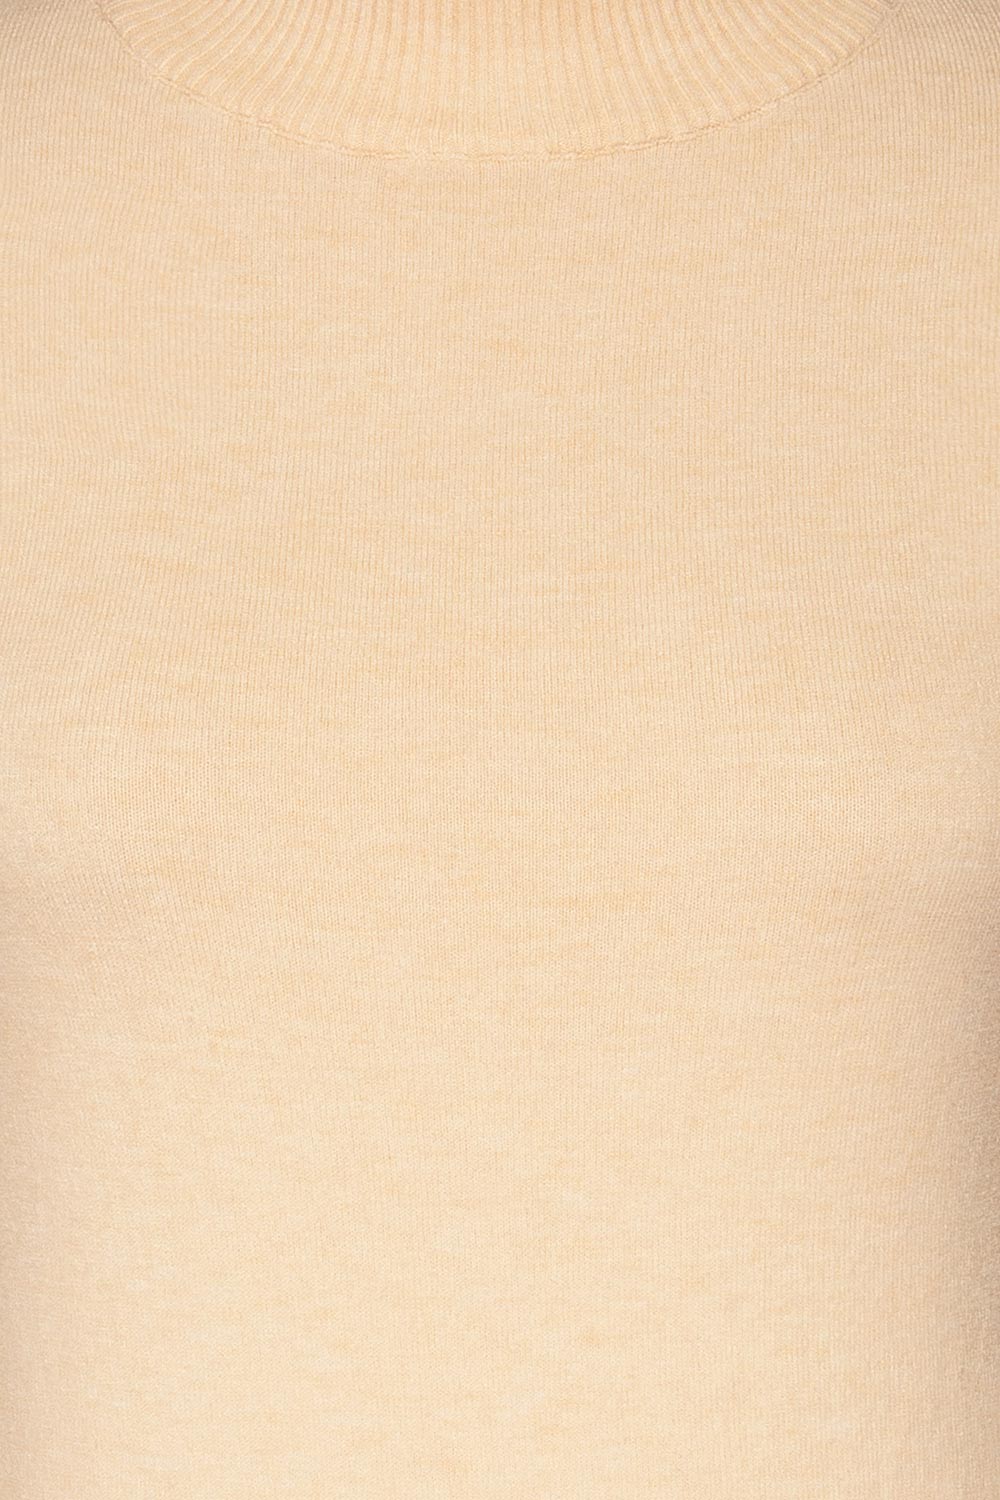 Kuznia Cream Long Sleeve Mock Neck Top | La petite garçonne fabric